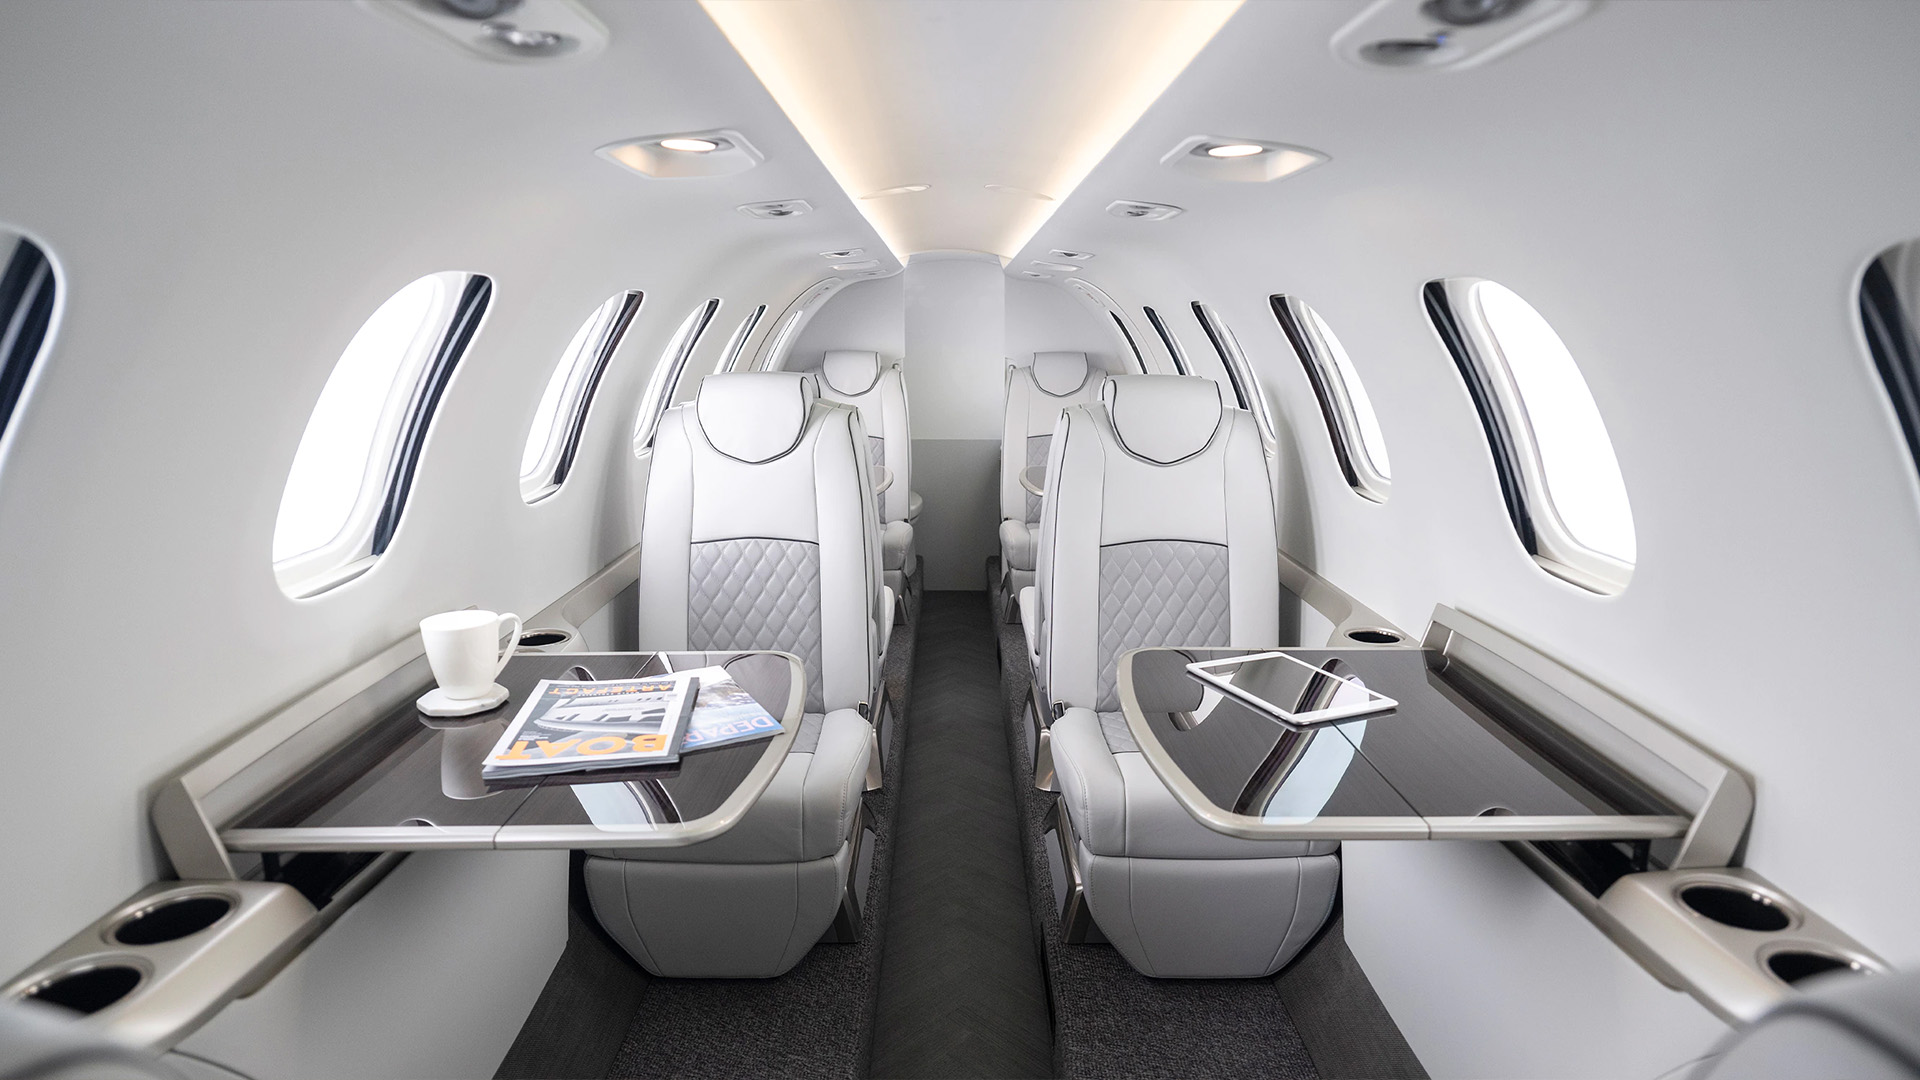 4 Passenger Jet Interior